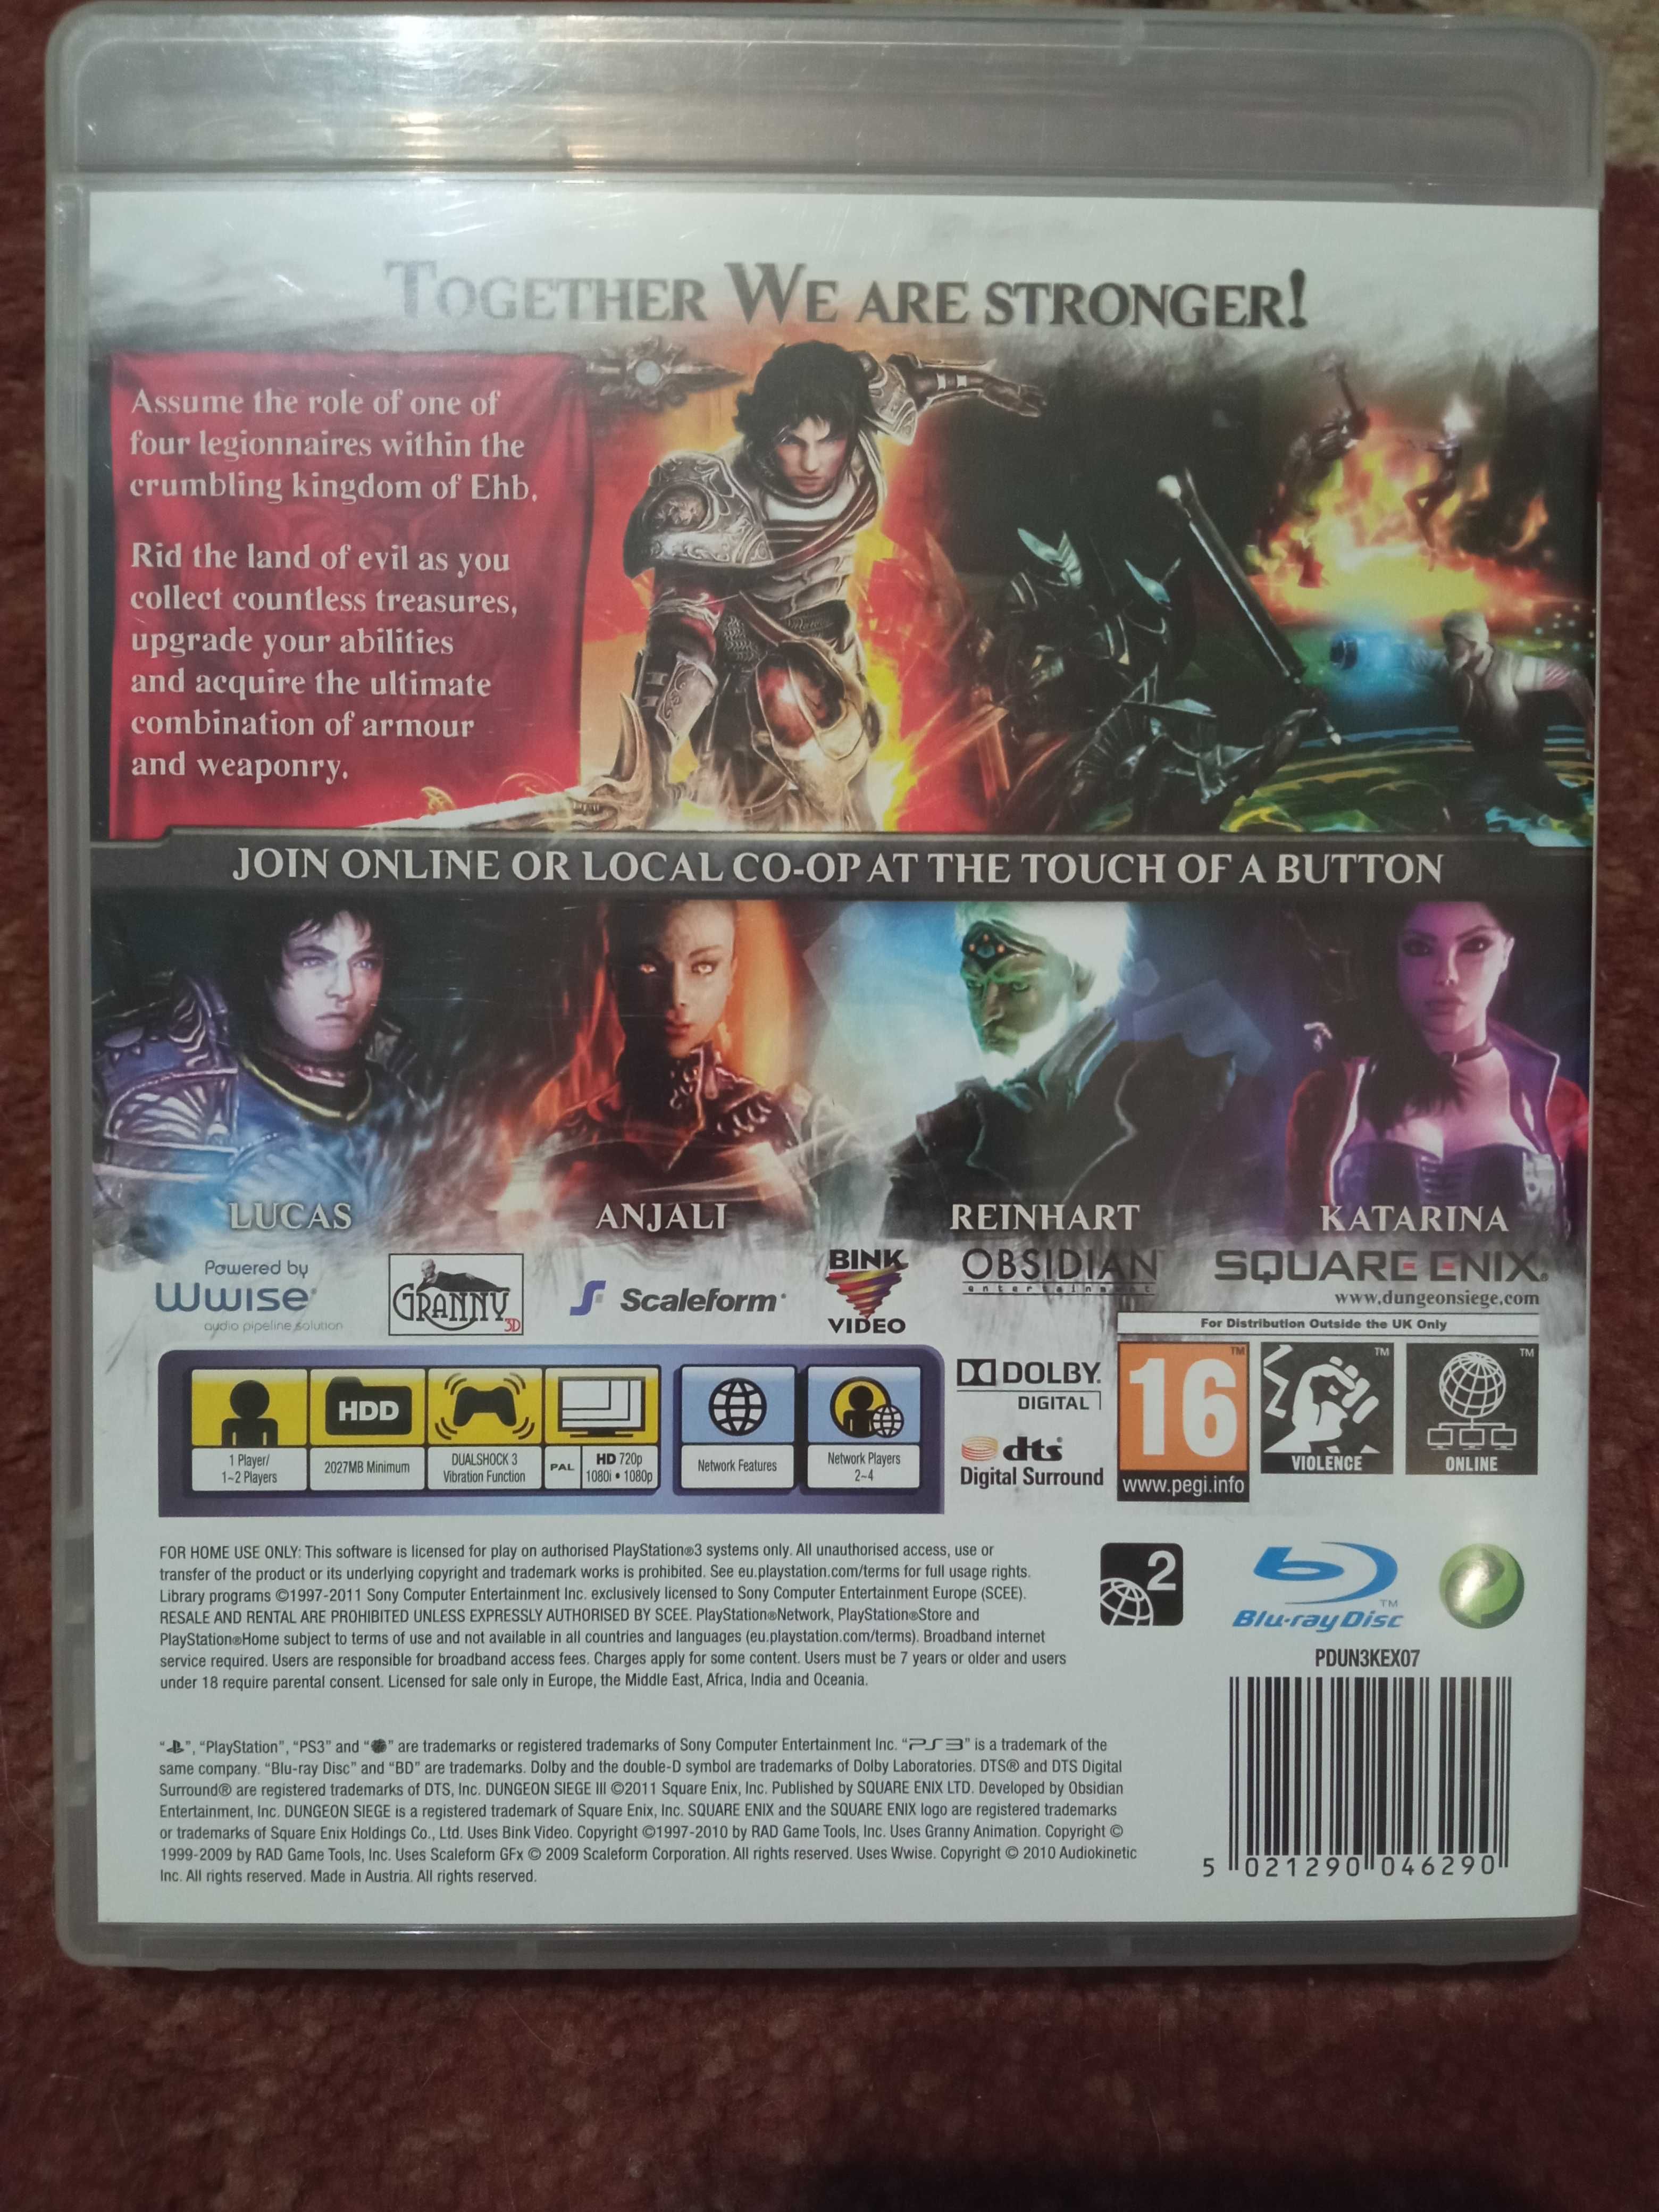 Gra Dungeon Siege III PS3 RPG na konsolę playstation 3